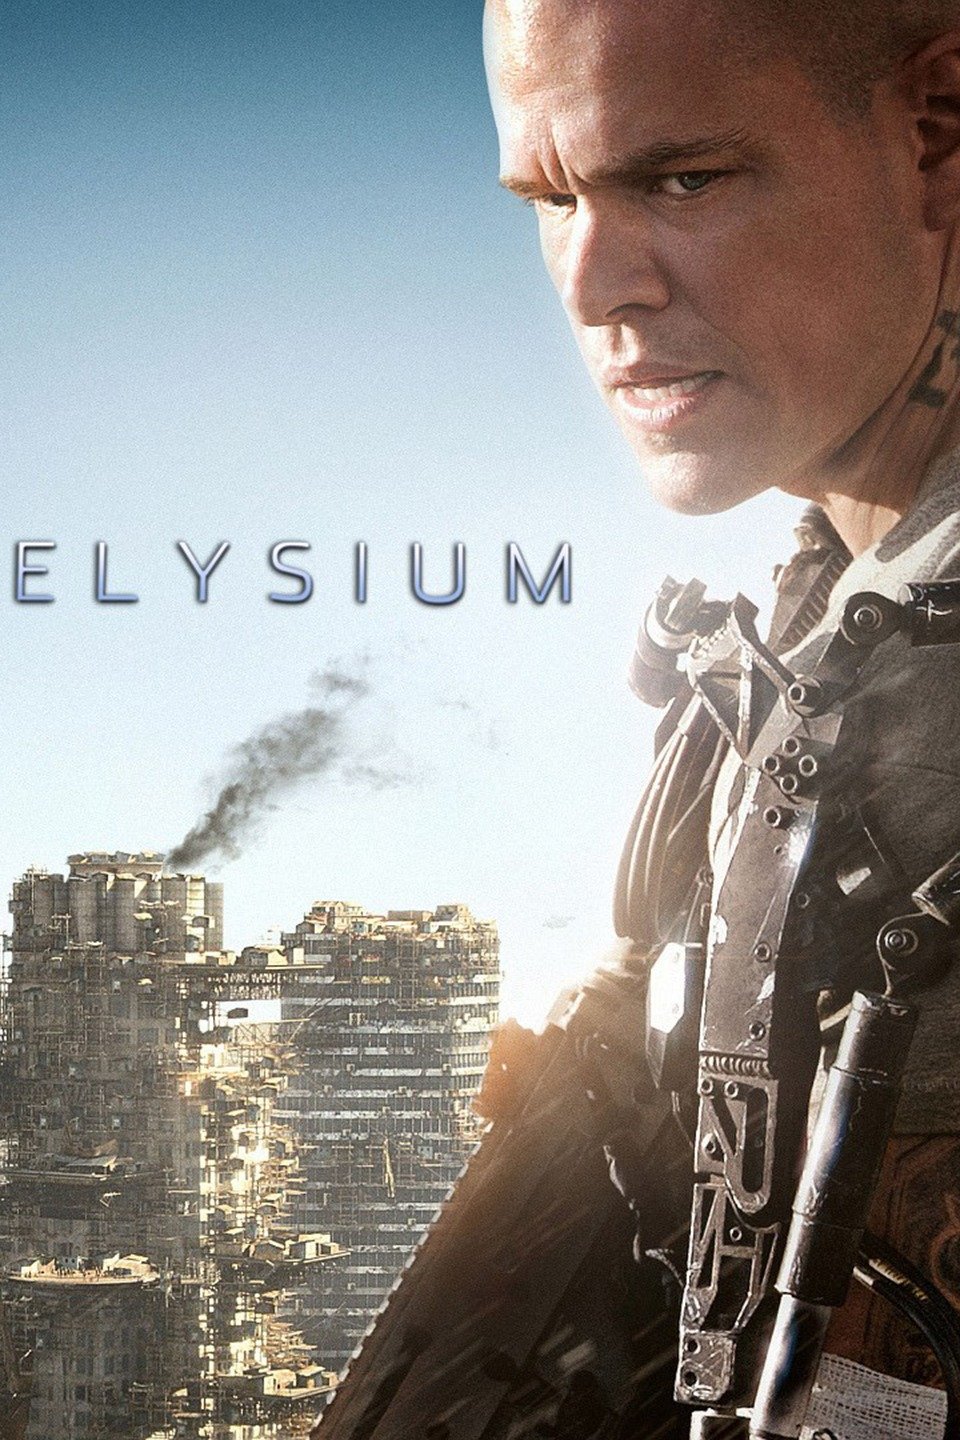 [MINI Super-HQ] Elysium (2013) เอลลิเซี่ยม ปลดแอกโลกอนาคต [1080p] [พากย์ไทย 5.1 + อังกฤษ DTS] [บรรยายไทย + อังกฤษ] [เสียงไทย + ซับไทย] [ONE2UP]